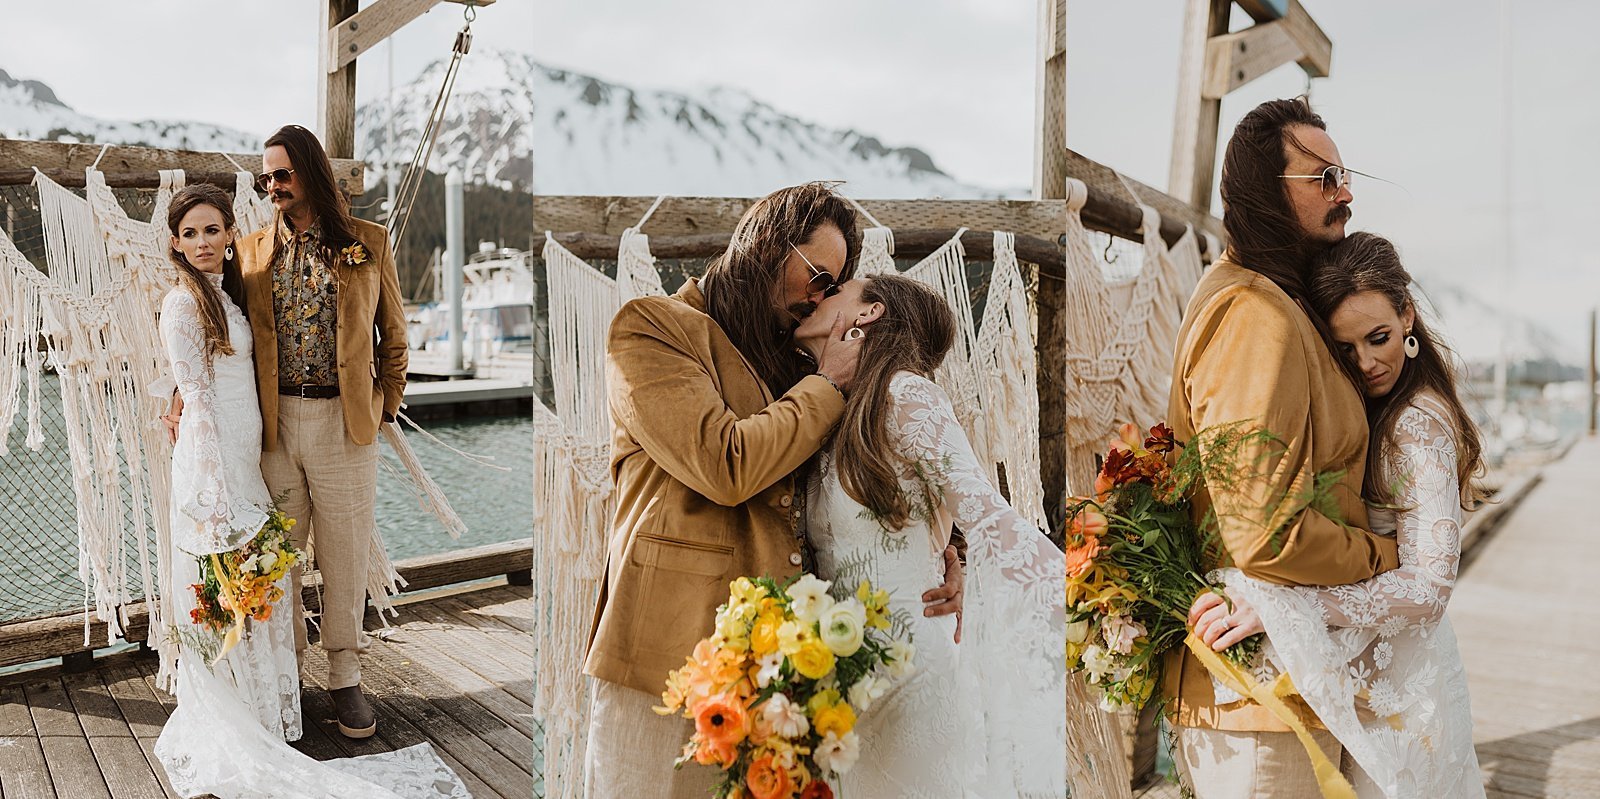  Couple kissing on a dock in 70s attire by Alaska wedding photographer Theresa McDonald  